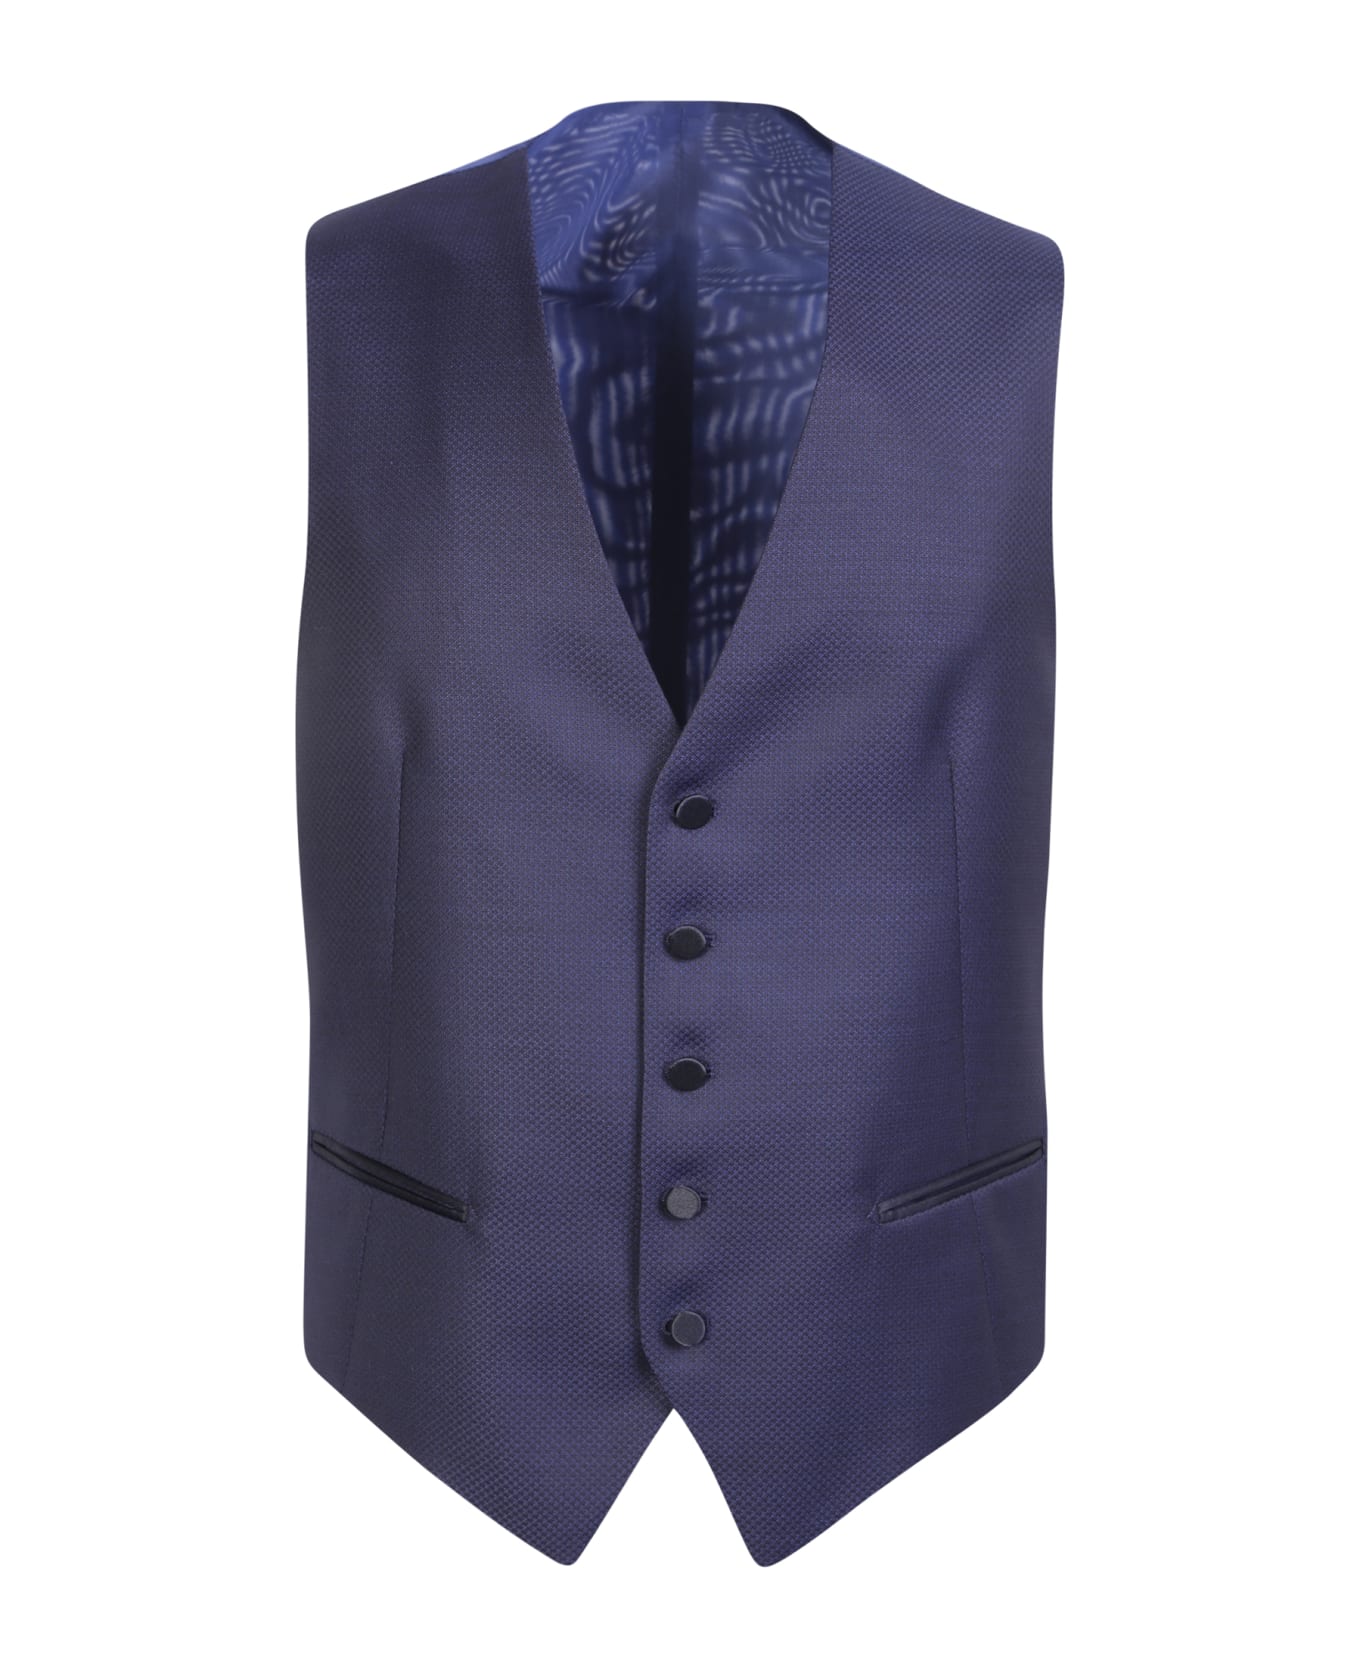 Tagliatore Blue Suit - Blue スーツ